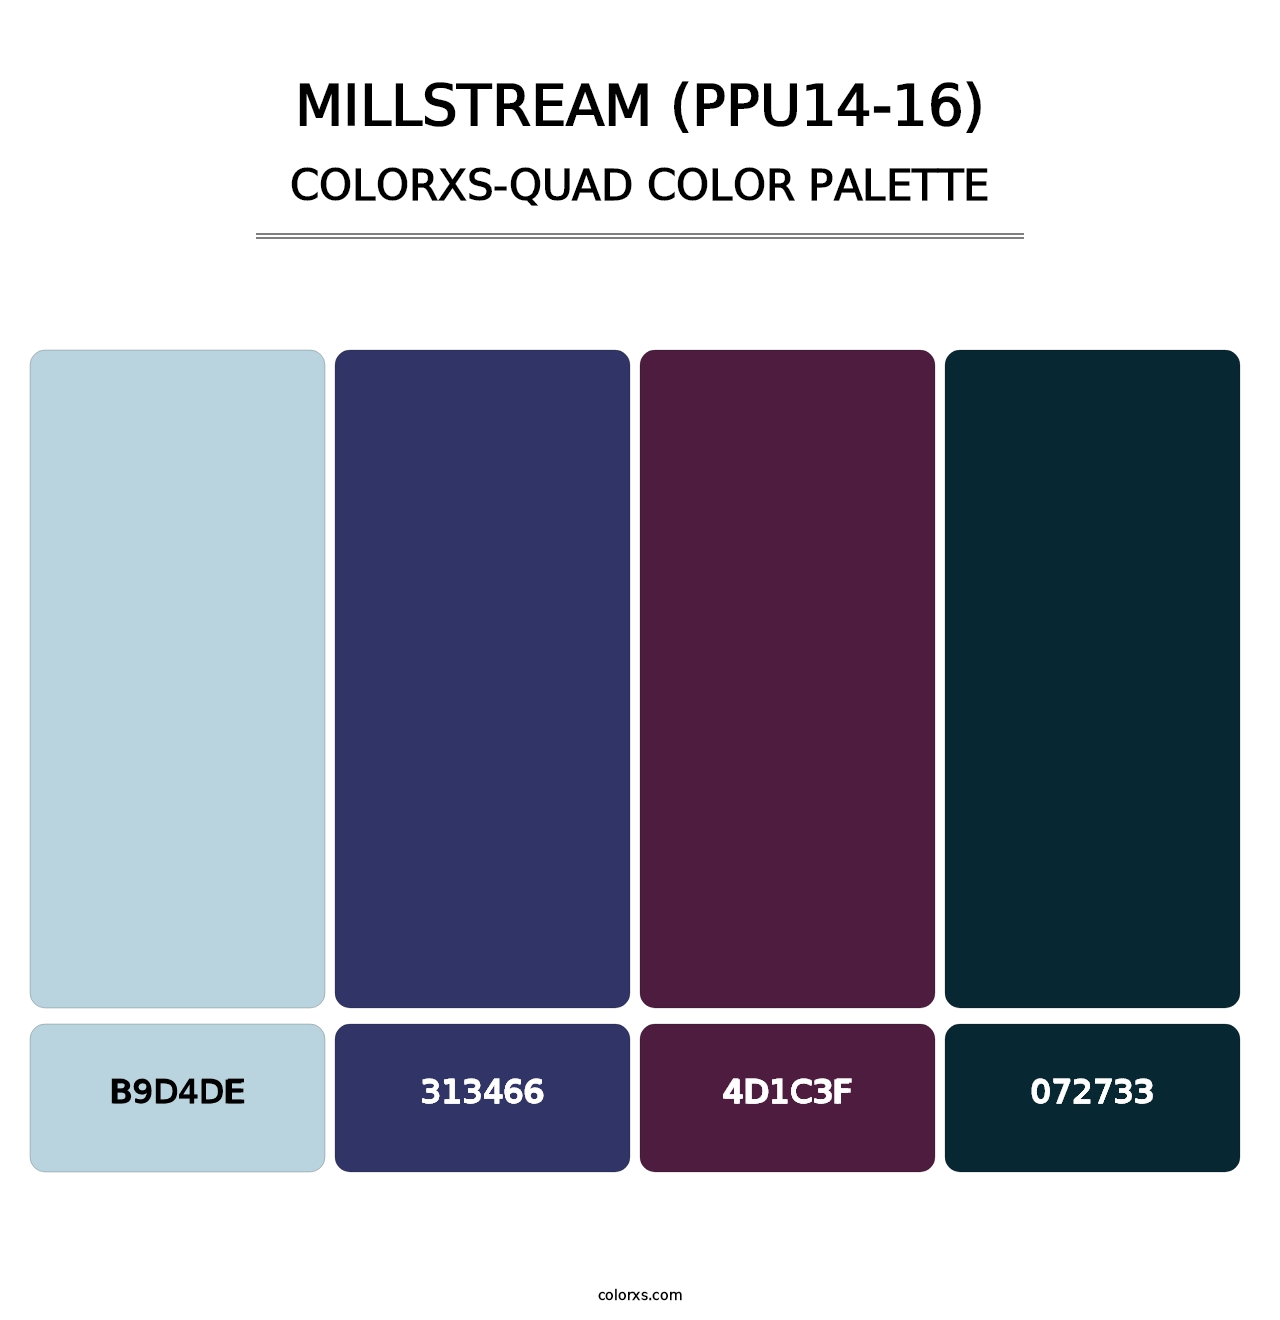 Millstream (PPU14-16) - Colorxs Quad Palette